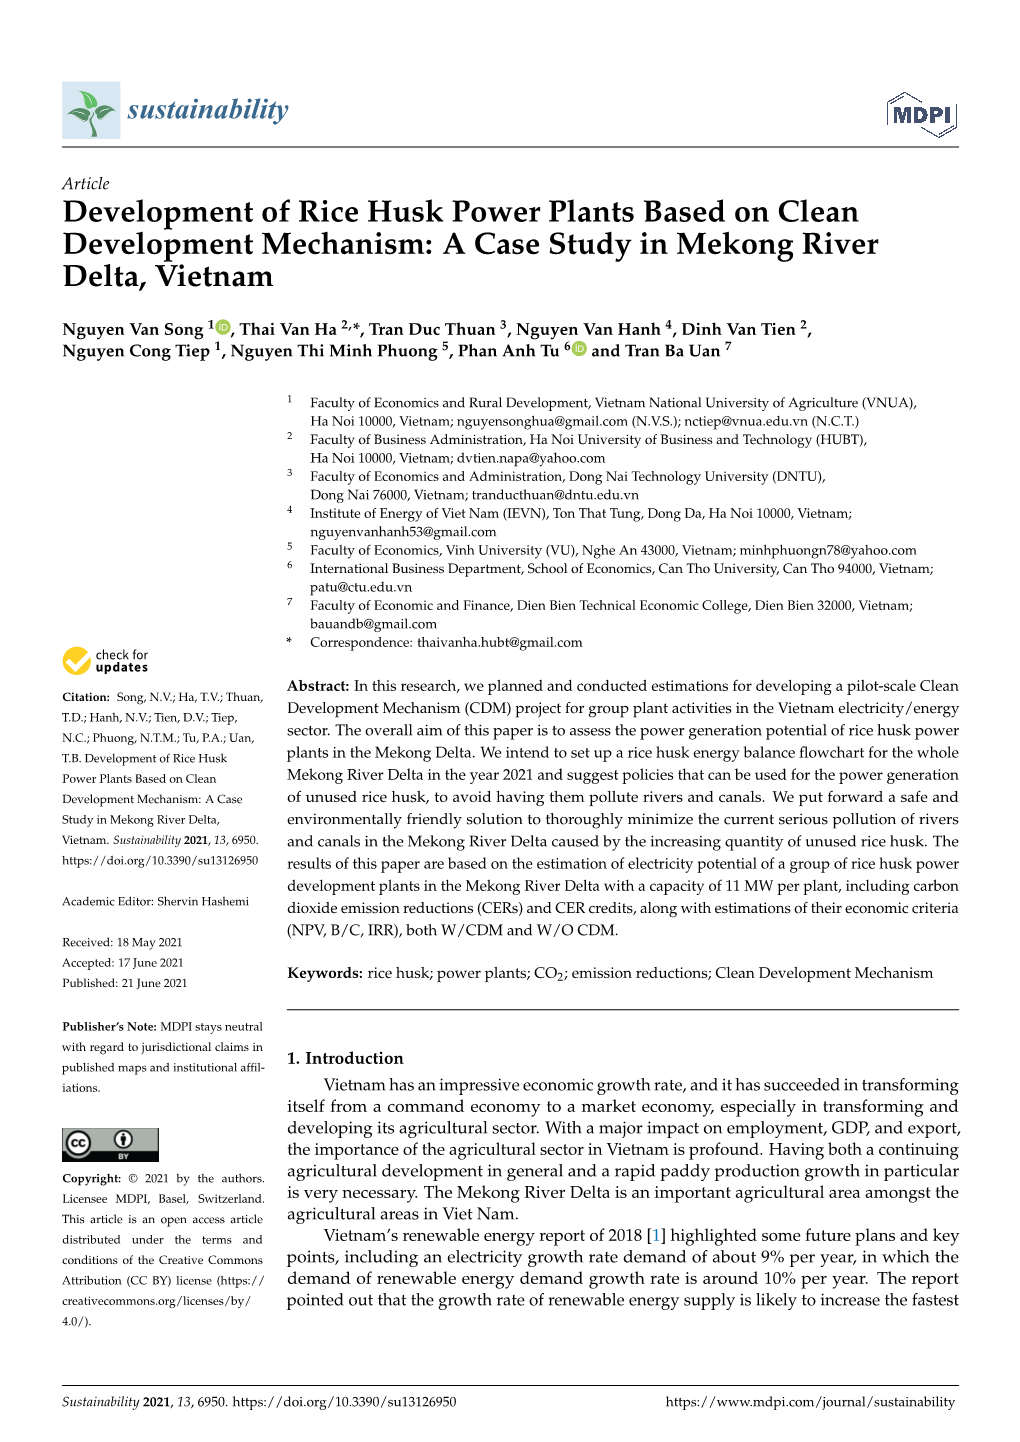 Development of Rice Husk Power Plants Based on Clean Development Mechanism: a Case Study in Mekong River Delta, Vietnam